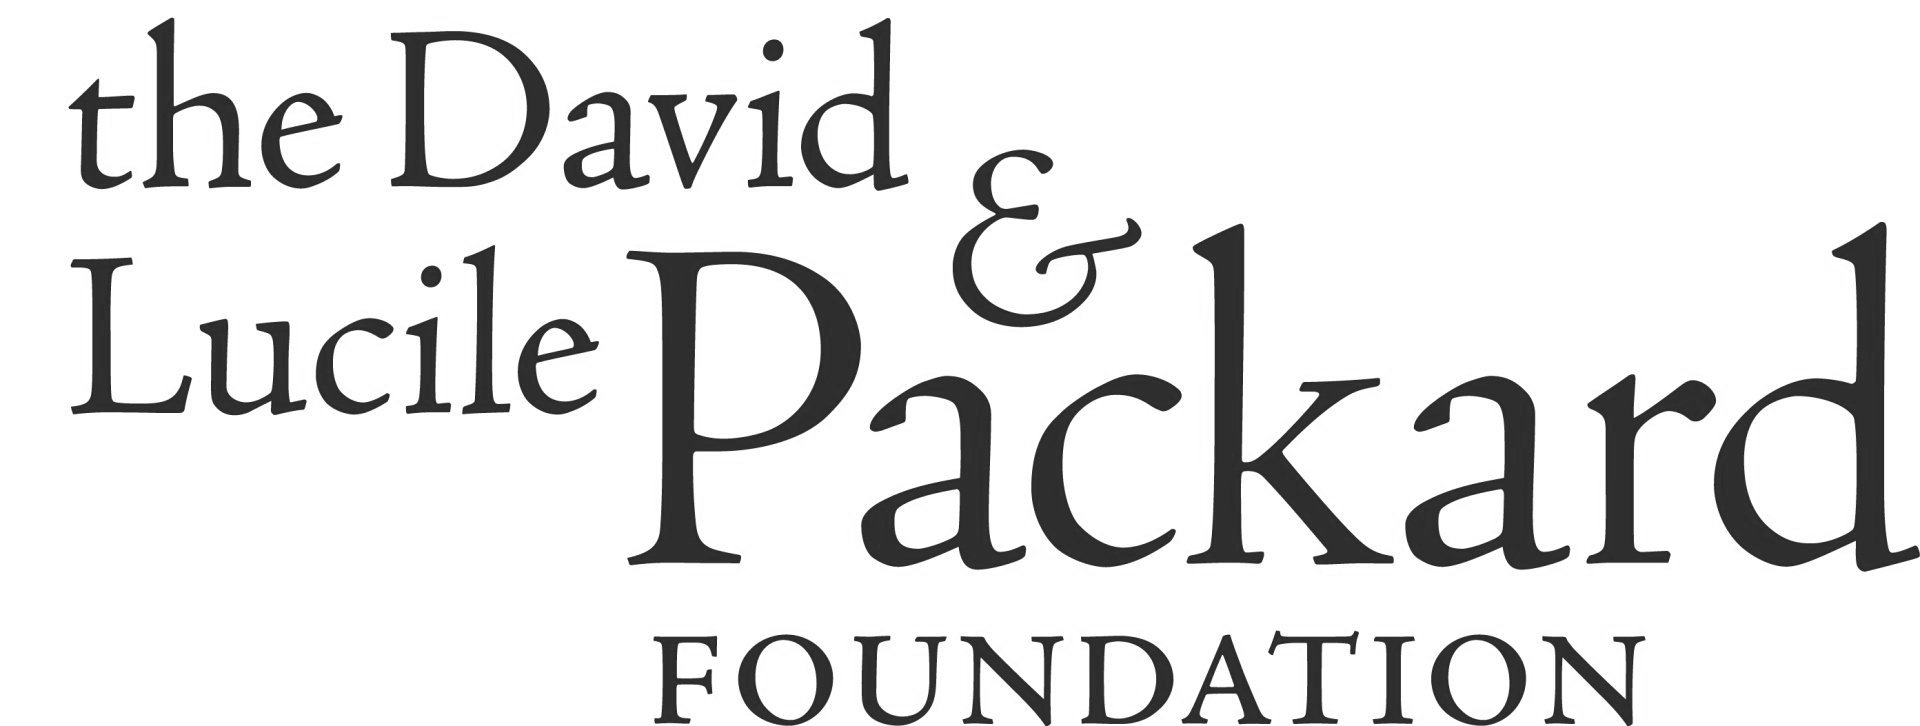 packard-foundation-logo.jpg